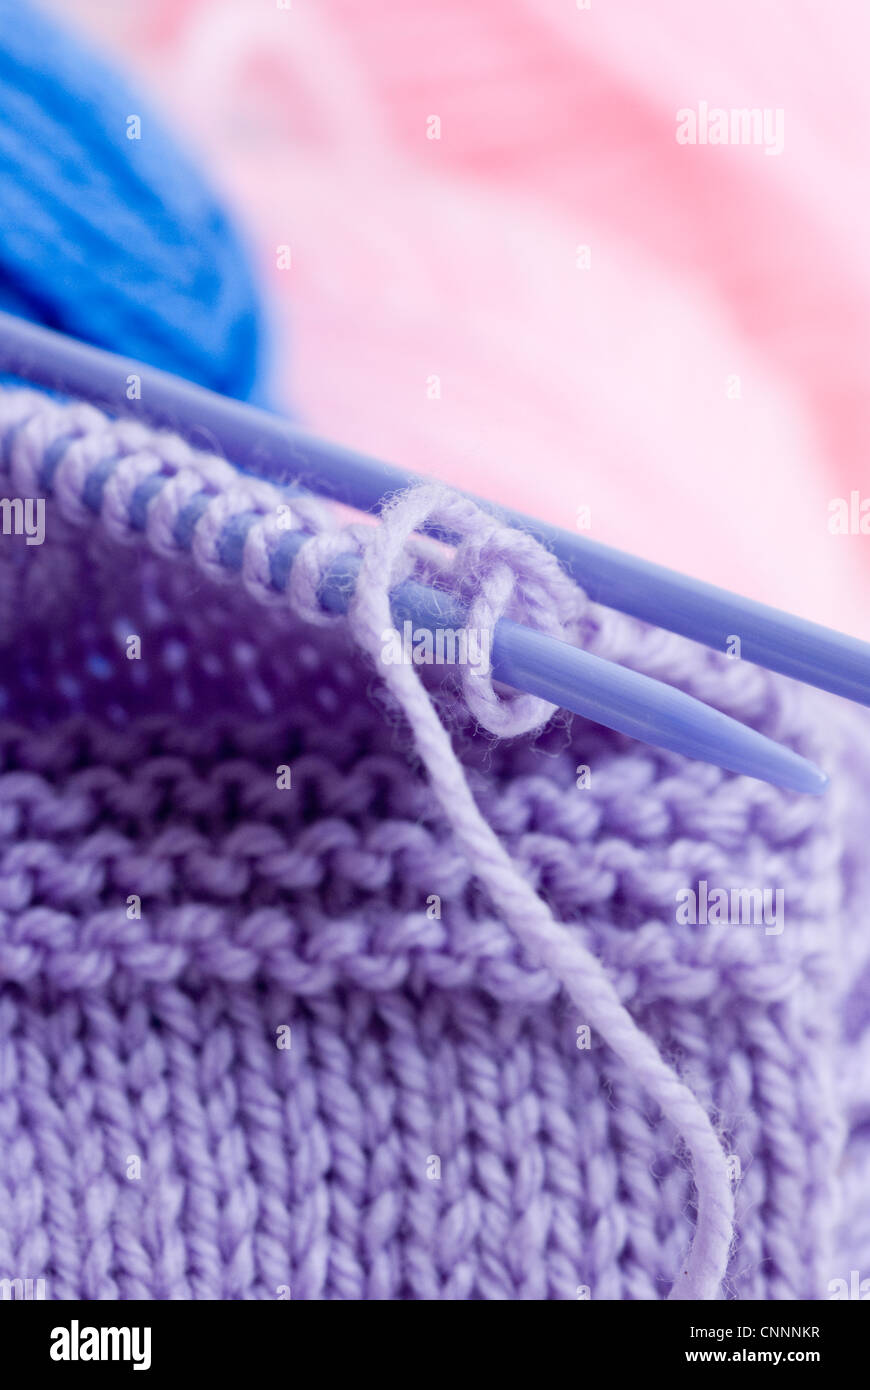 Knitting Close up of needles and knitting Stock Photo - Alamy